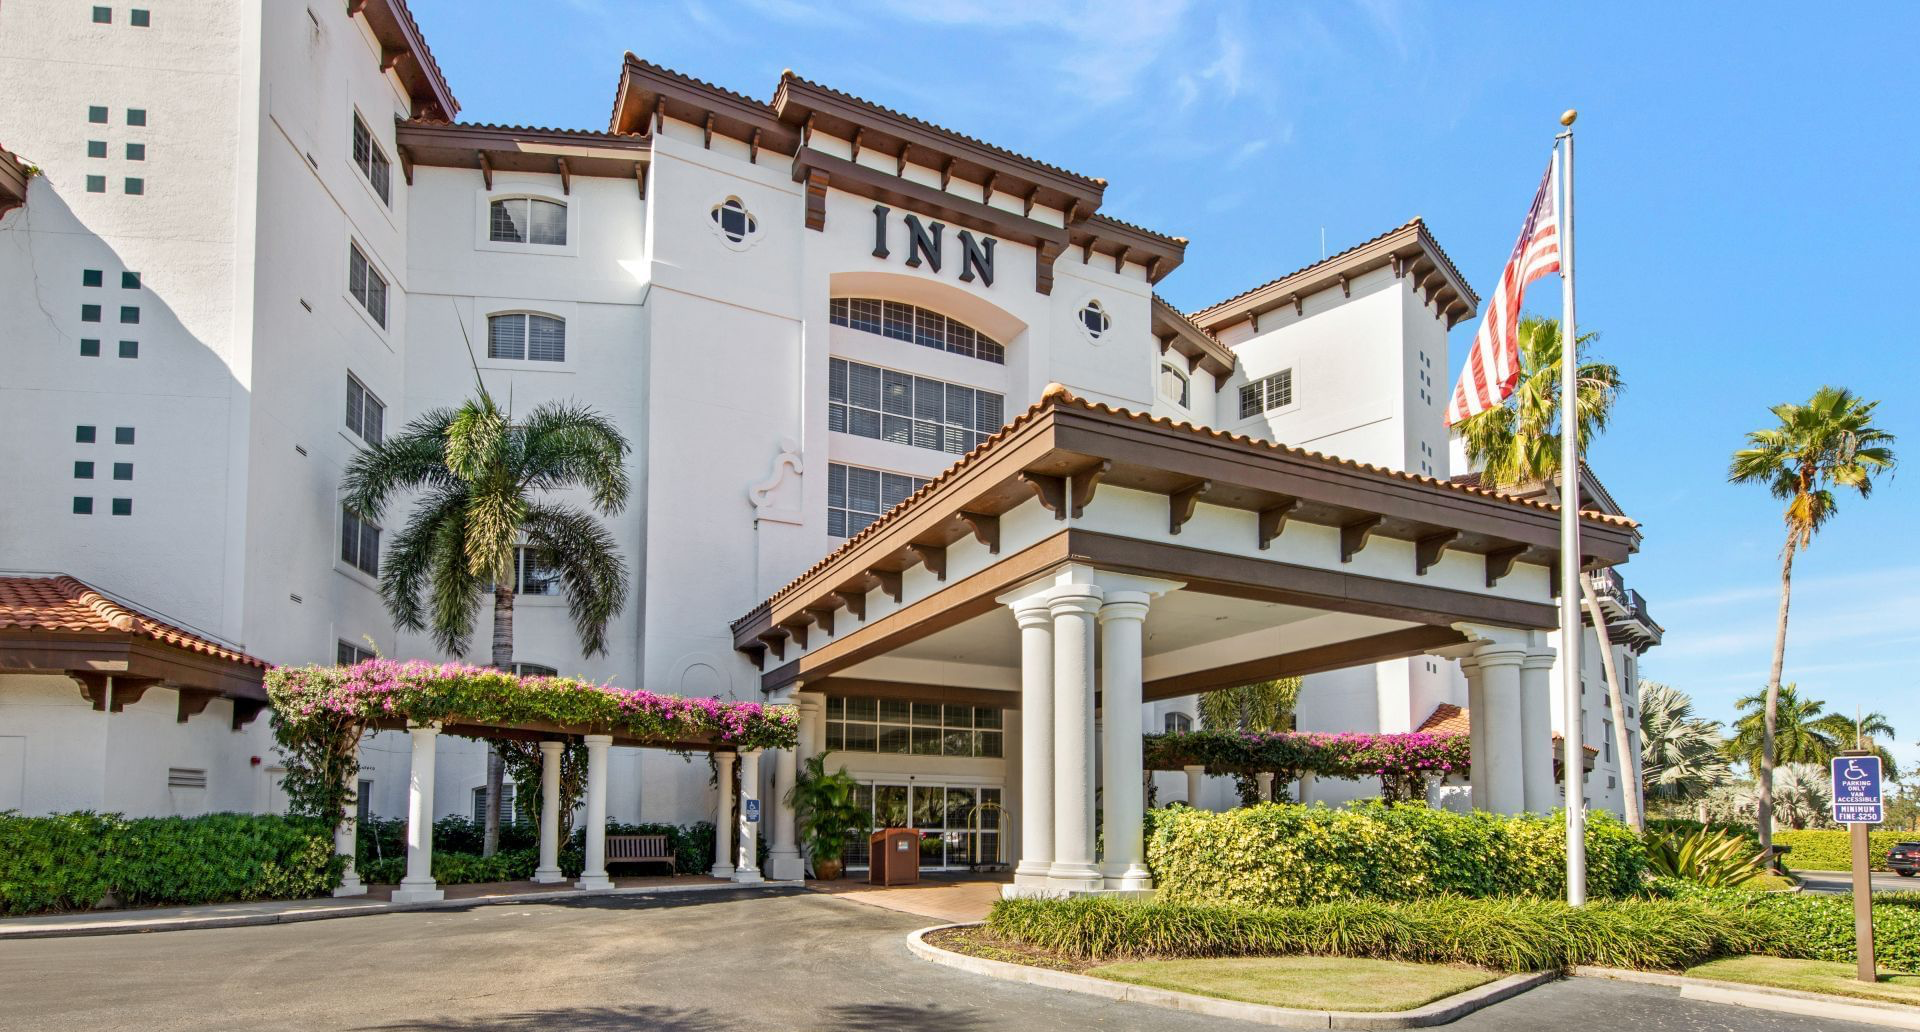 Four Diamond hotel Inn at Pelican Bay front entrance.